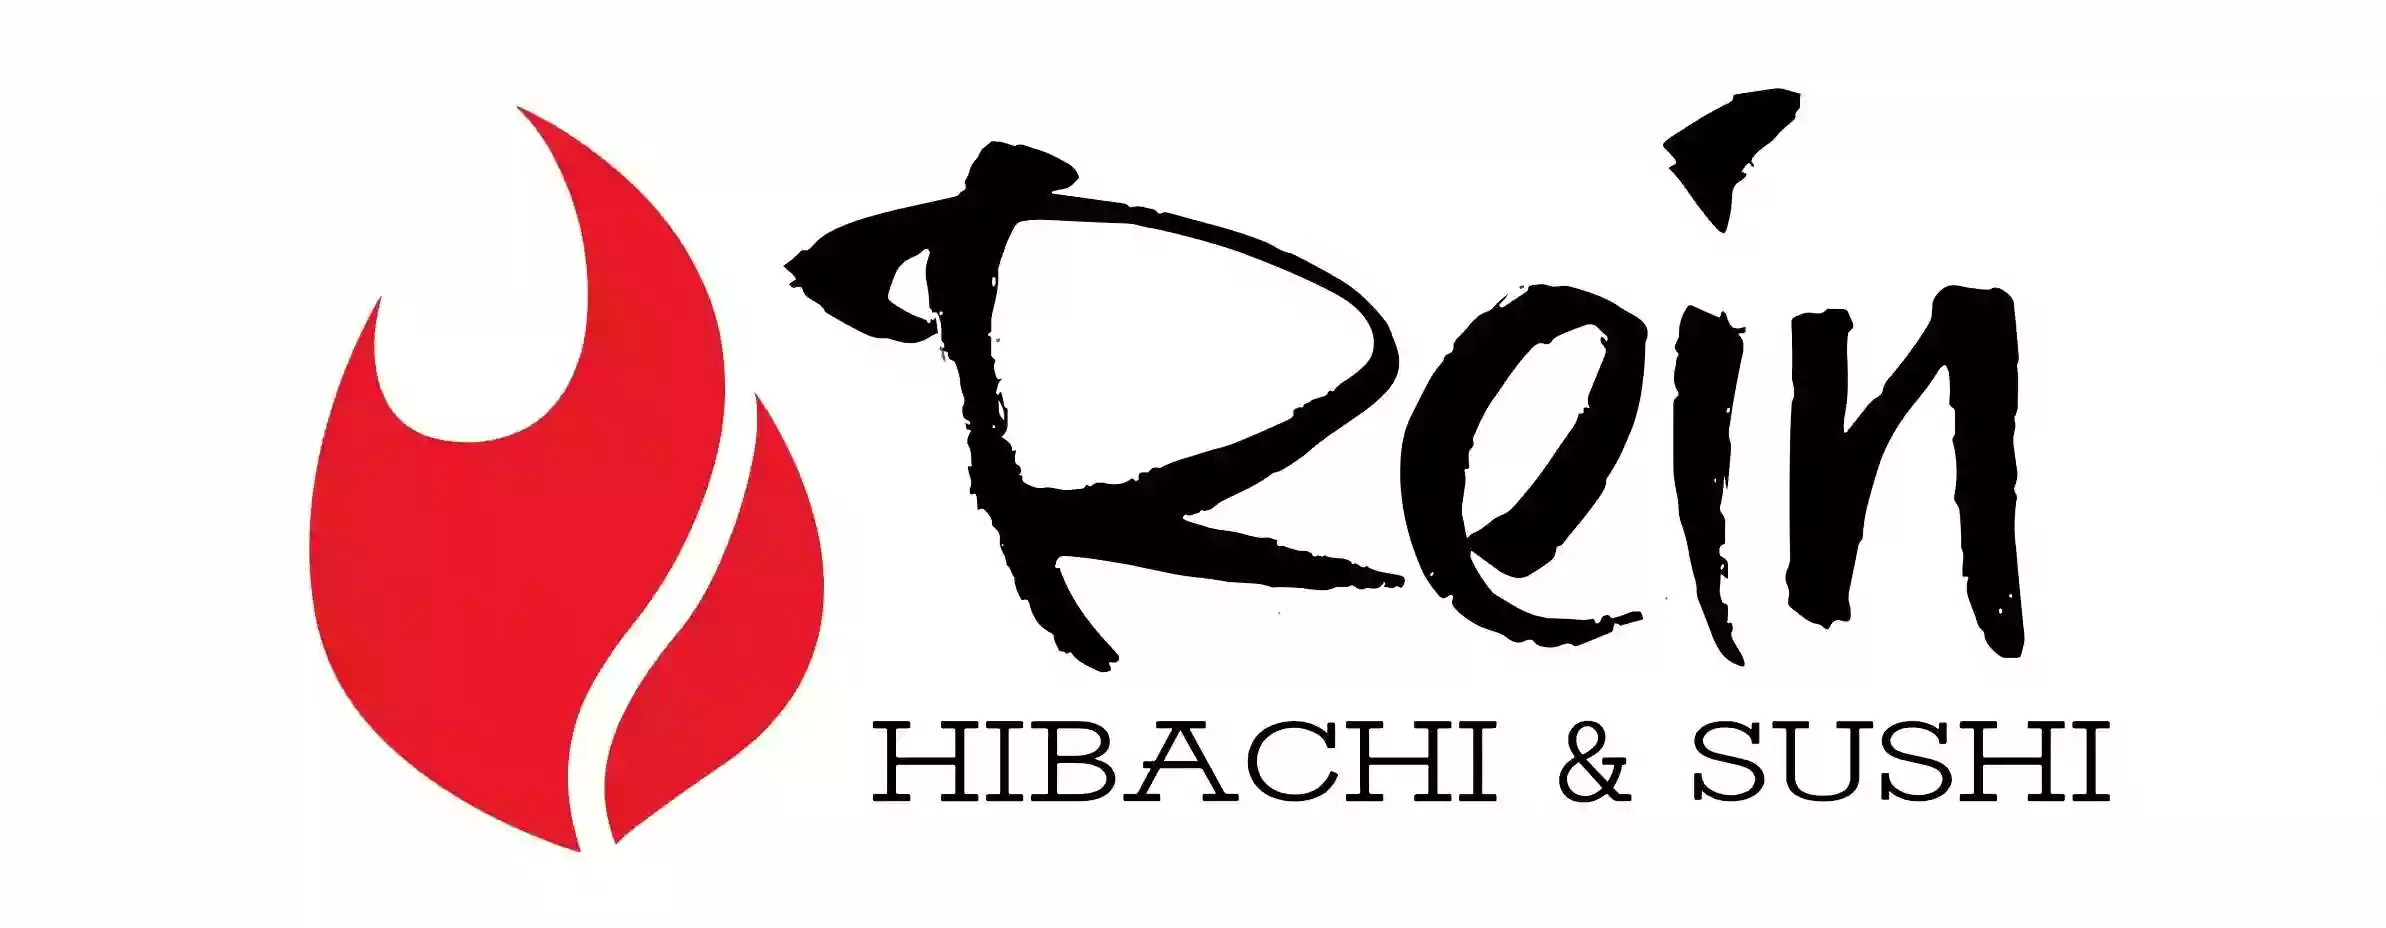 Rein Sushi and Hibachi